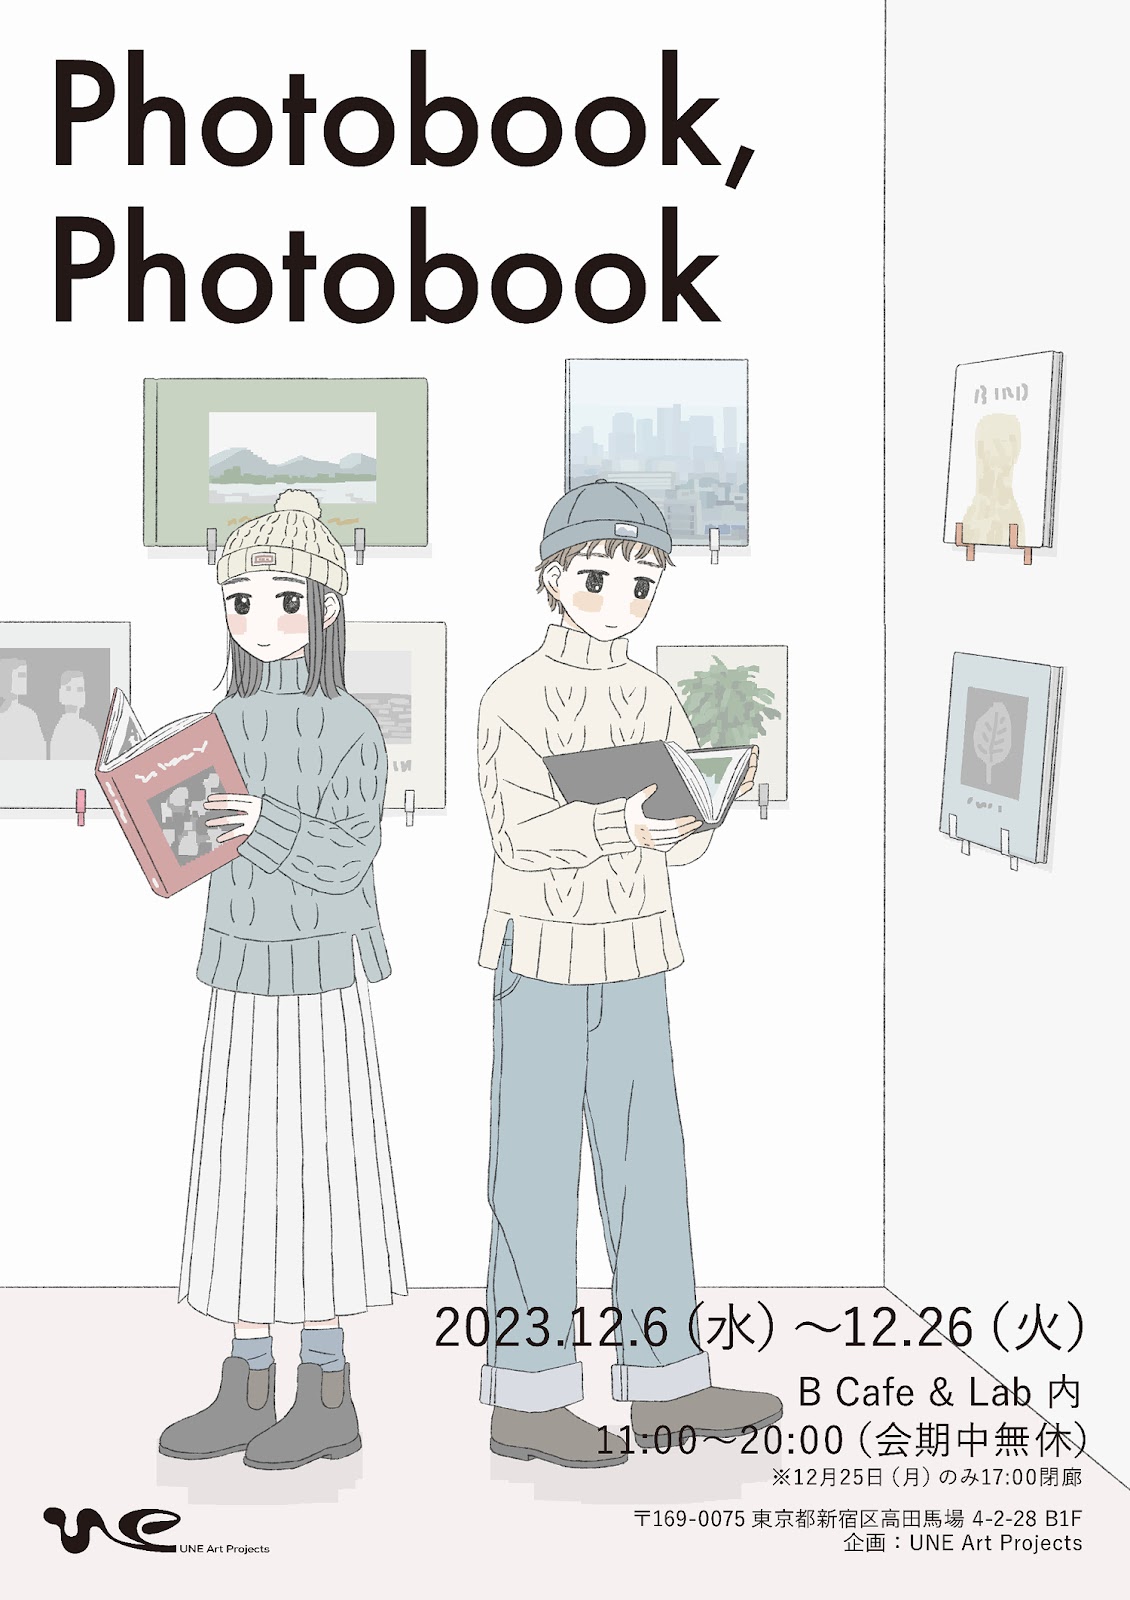 『Photobook, Photobook』ポスターイラスト